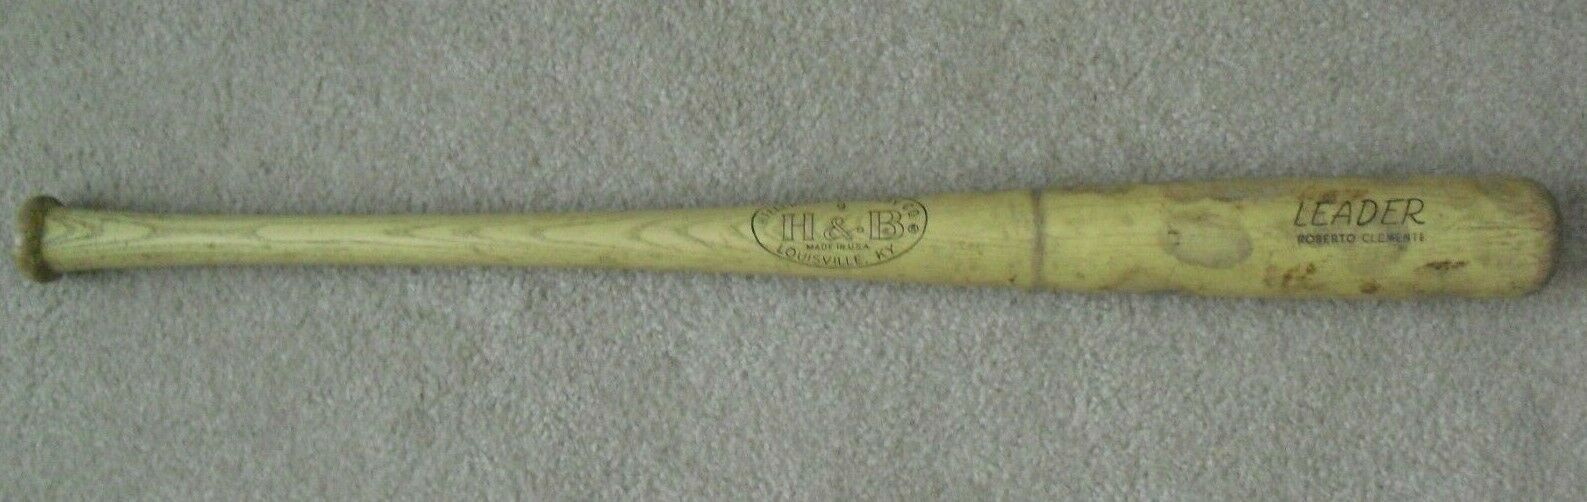 Vintage H&b Hillerich & Bradsby 9 Roberto Clemente Leader Baseball Bat